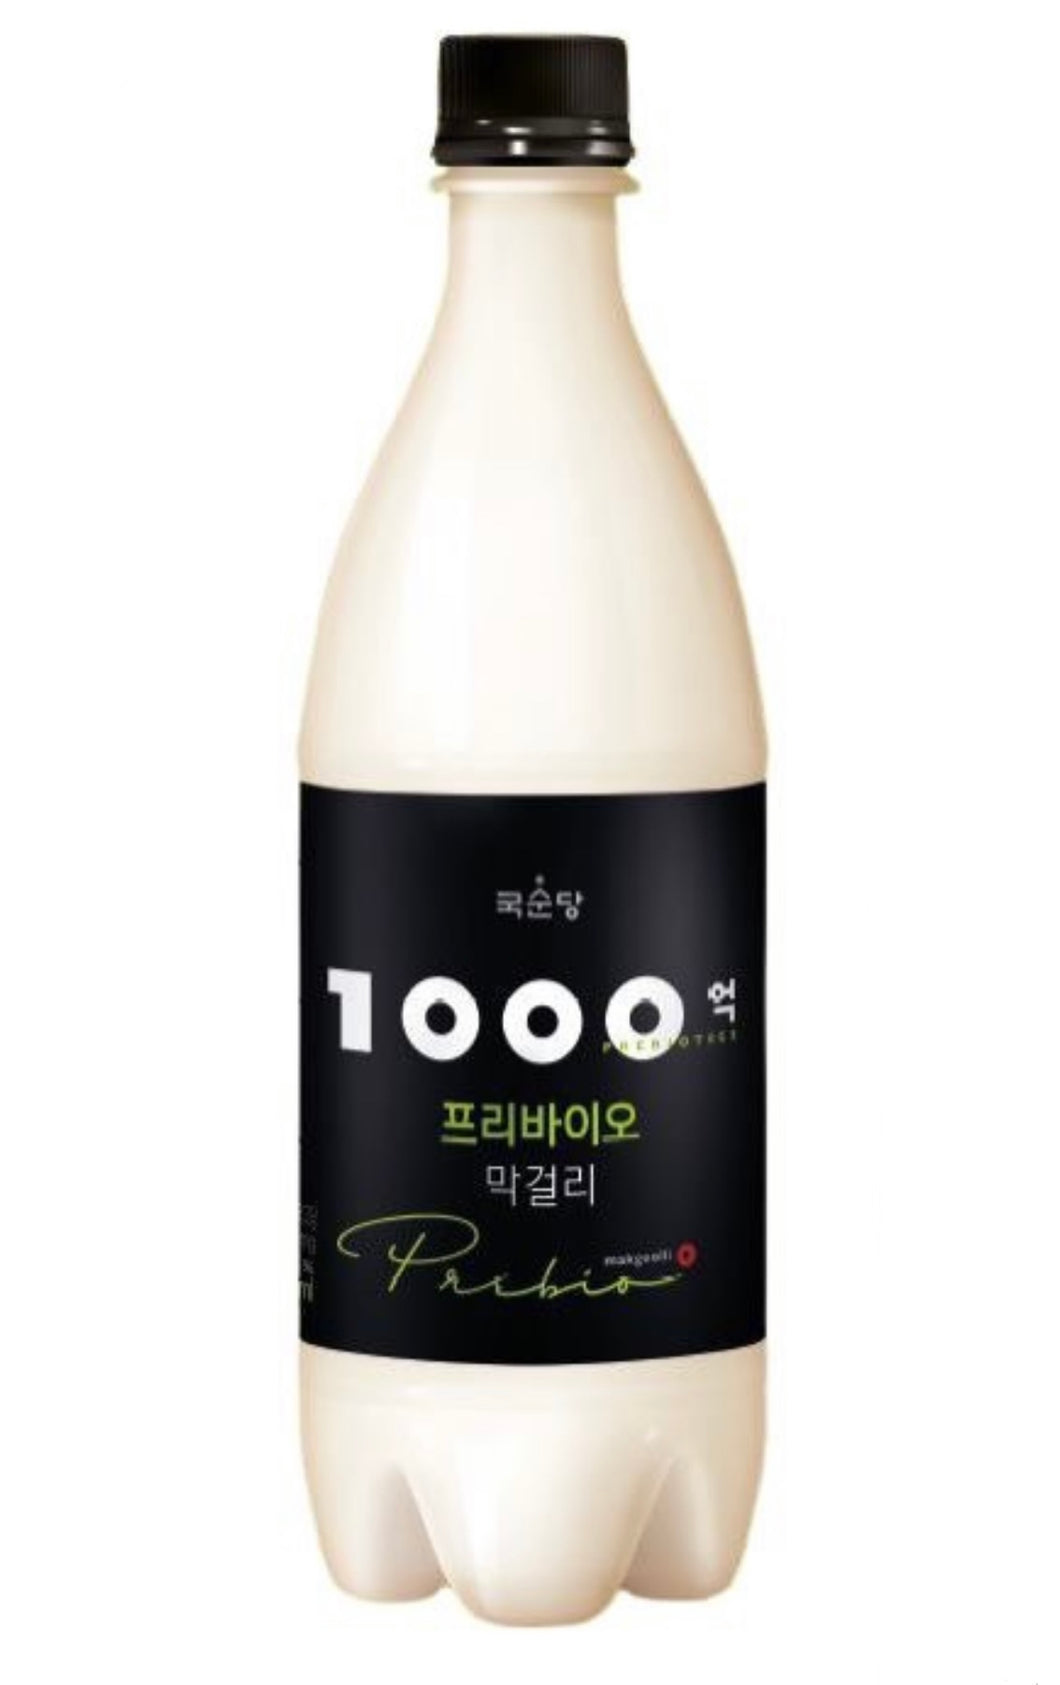 Kooksoondang Makgeolli 1000 Prebiotics Korean Rice Wine Alc. 5% 750ml *** <br> 韓國米酒